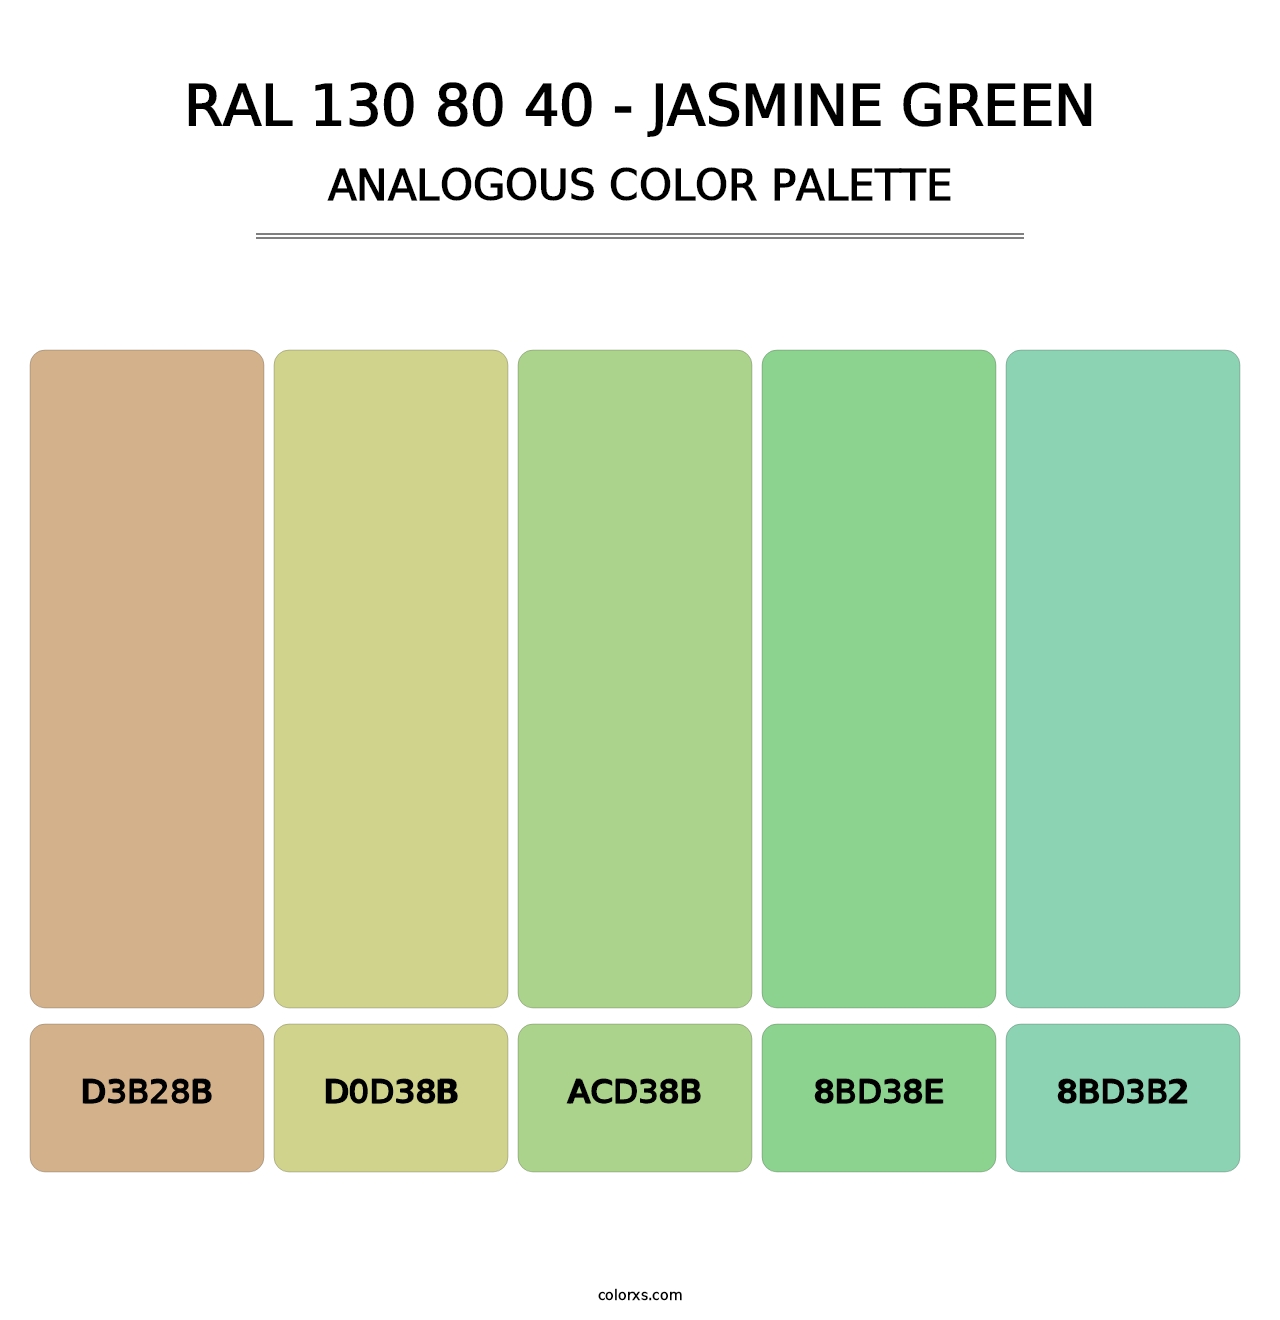 RAL 130 80 40 - Jasmine Green - Analogous Color Palette